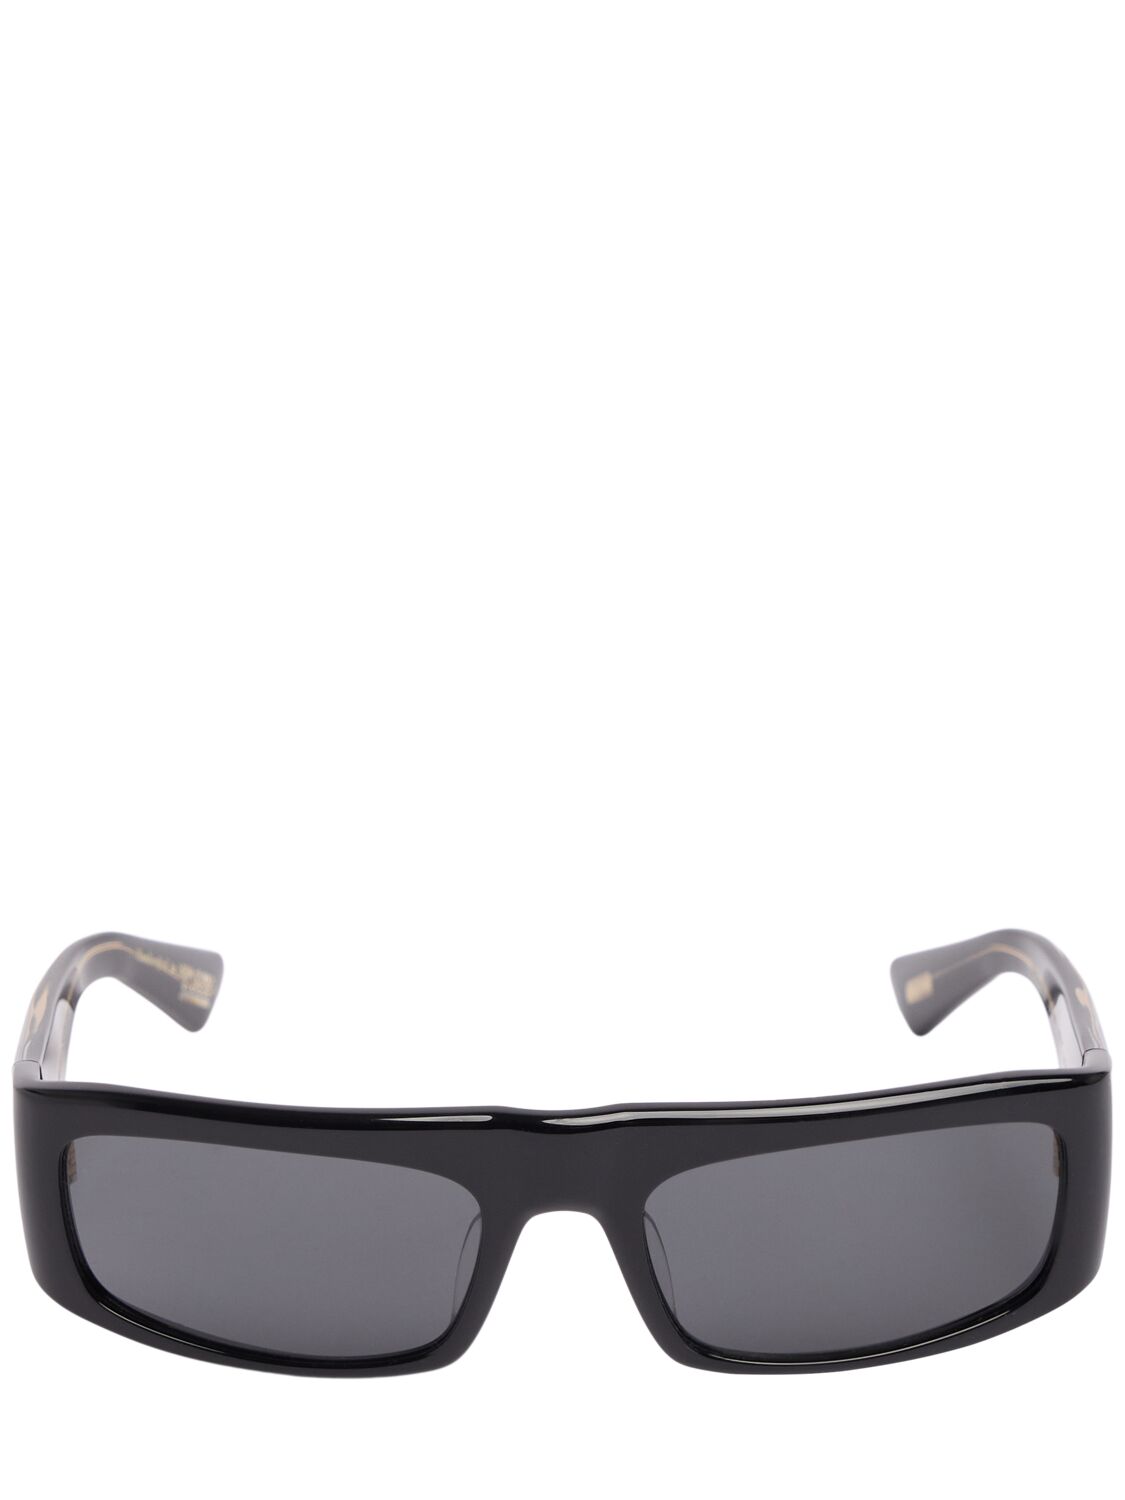 X Oliver People Square Sunglasses